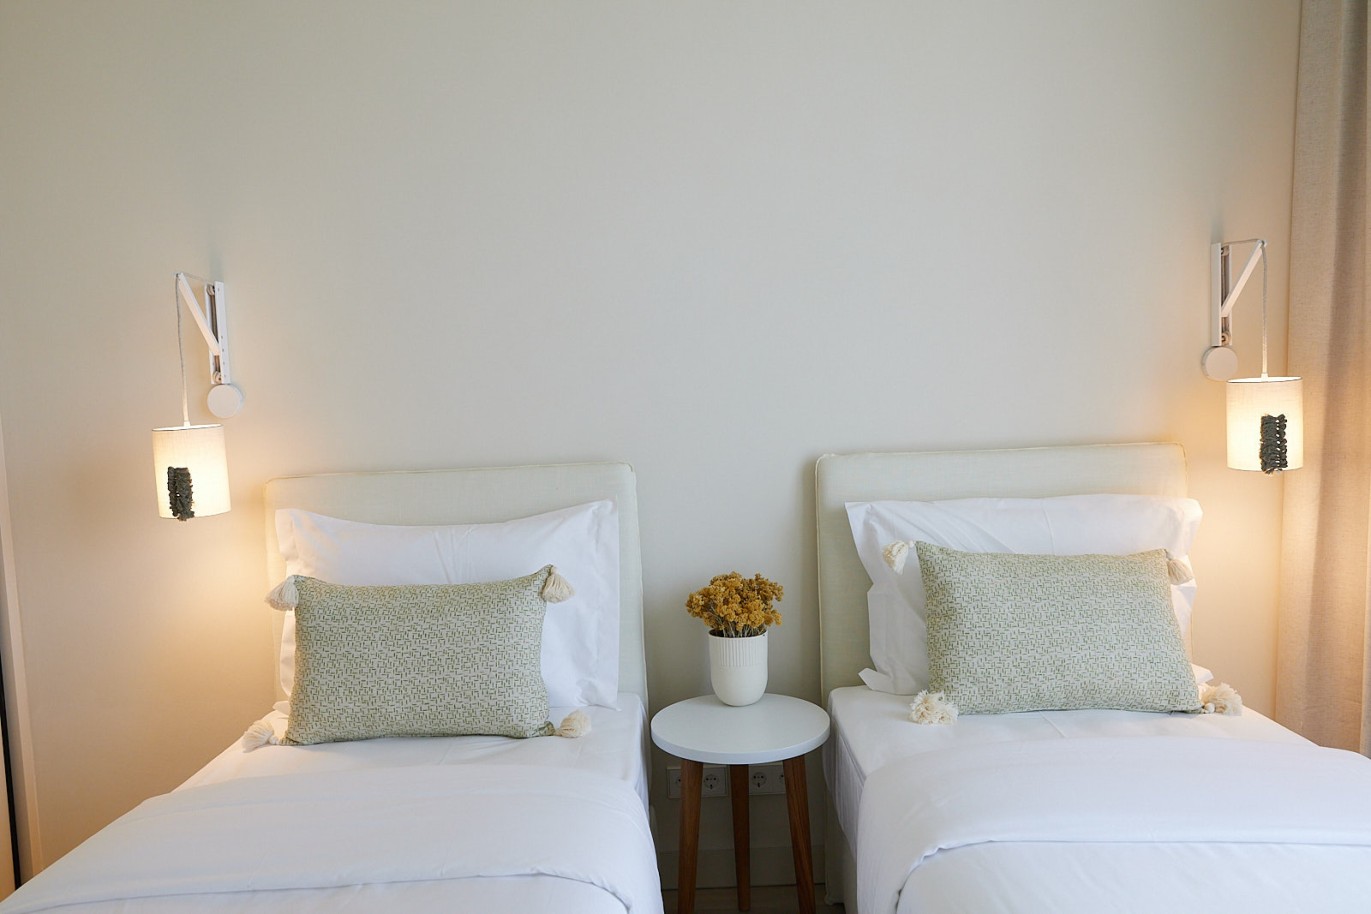 2 bedroom apartment in resort, for sale in Porches, Algarve_230647